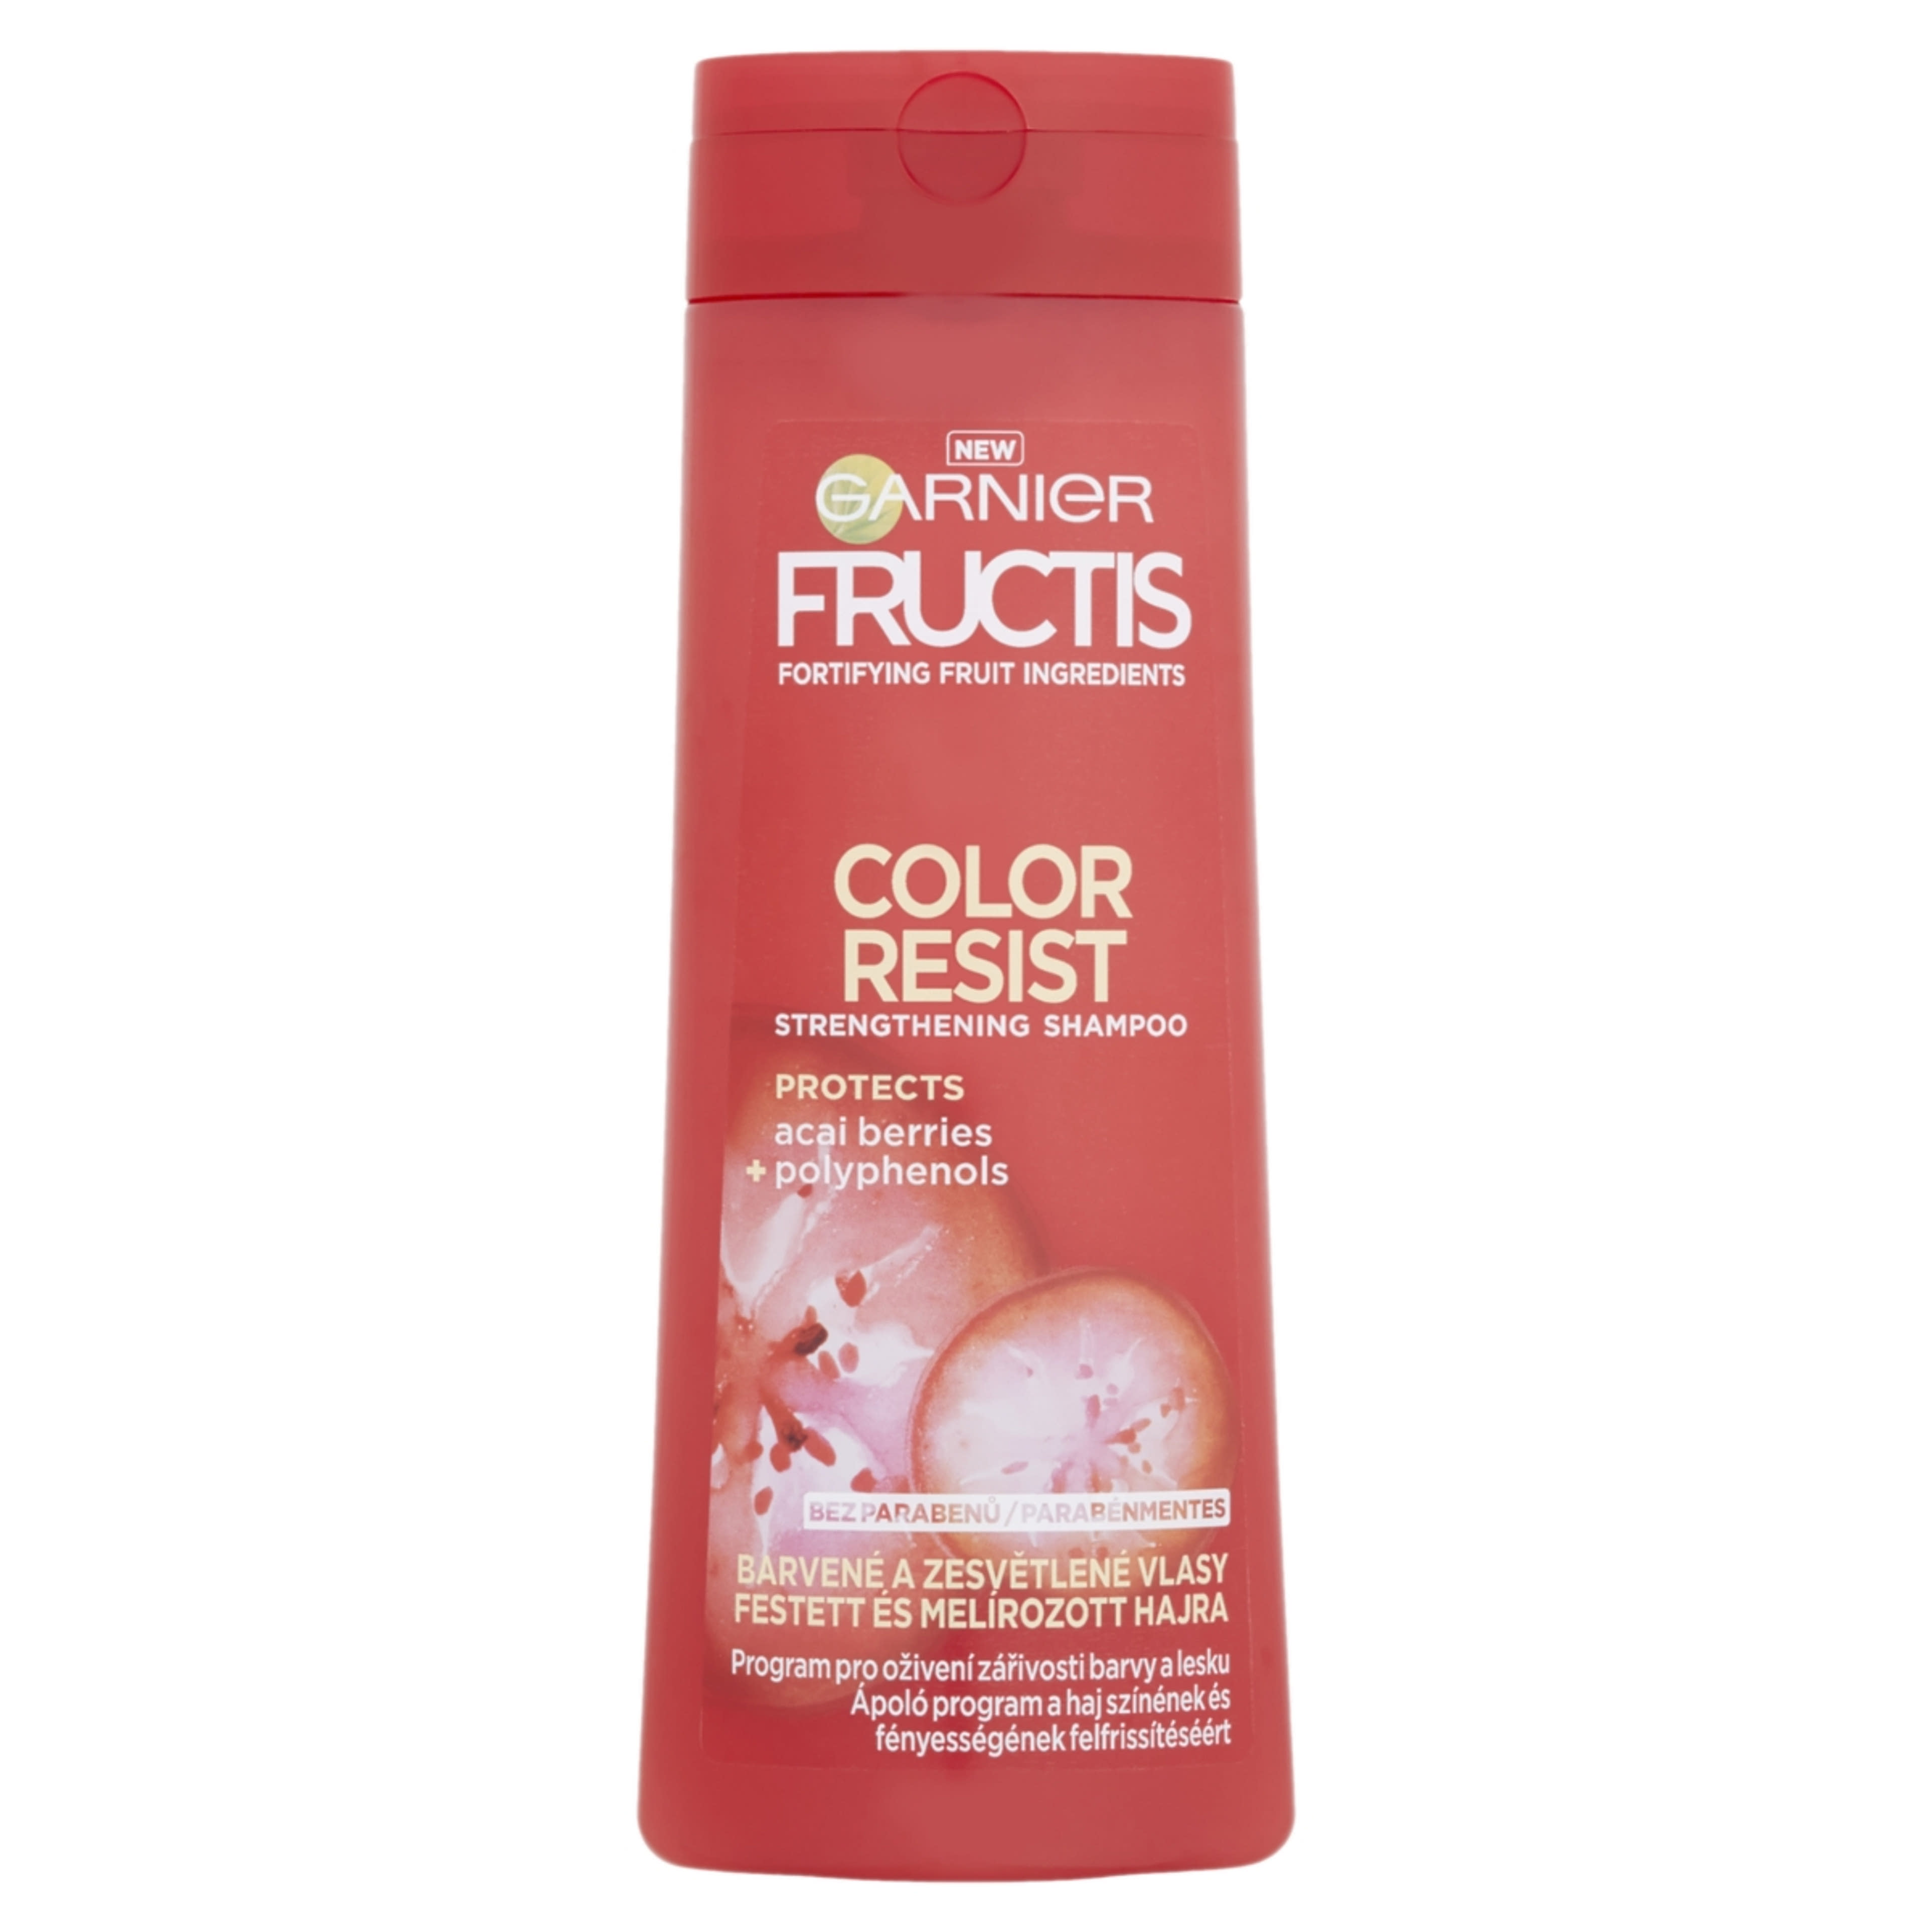 Garnier Fructis Color Resist sampon - 400 ml